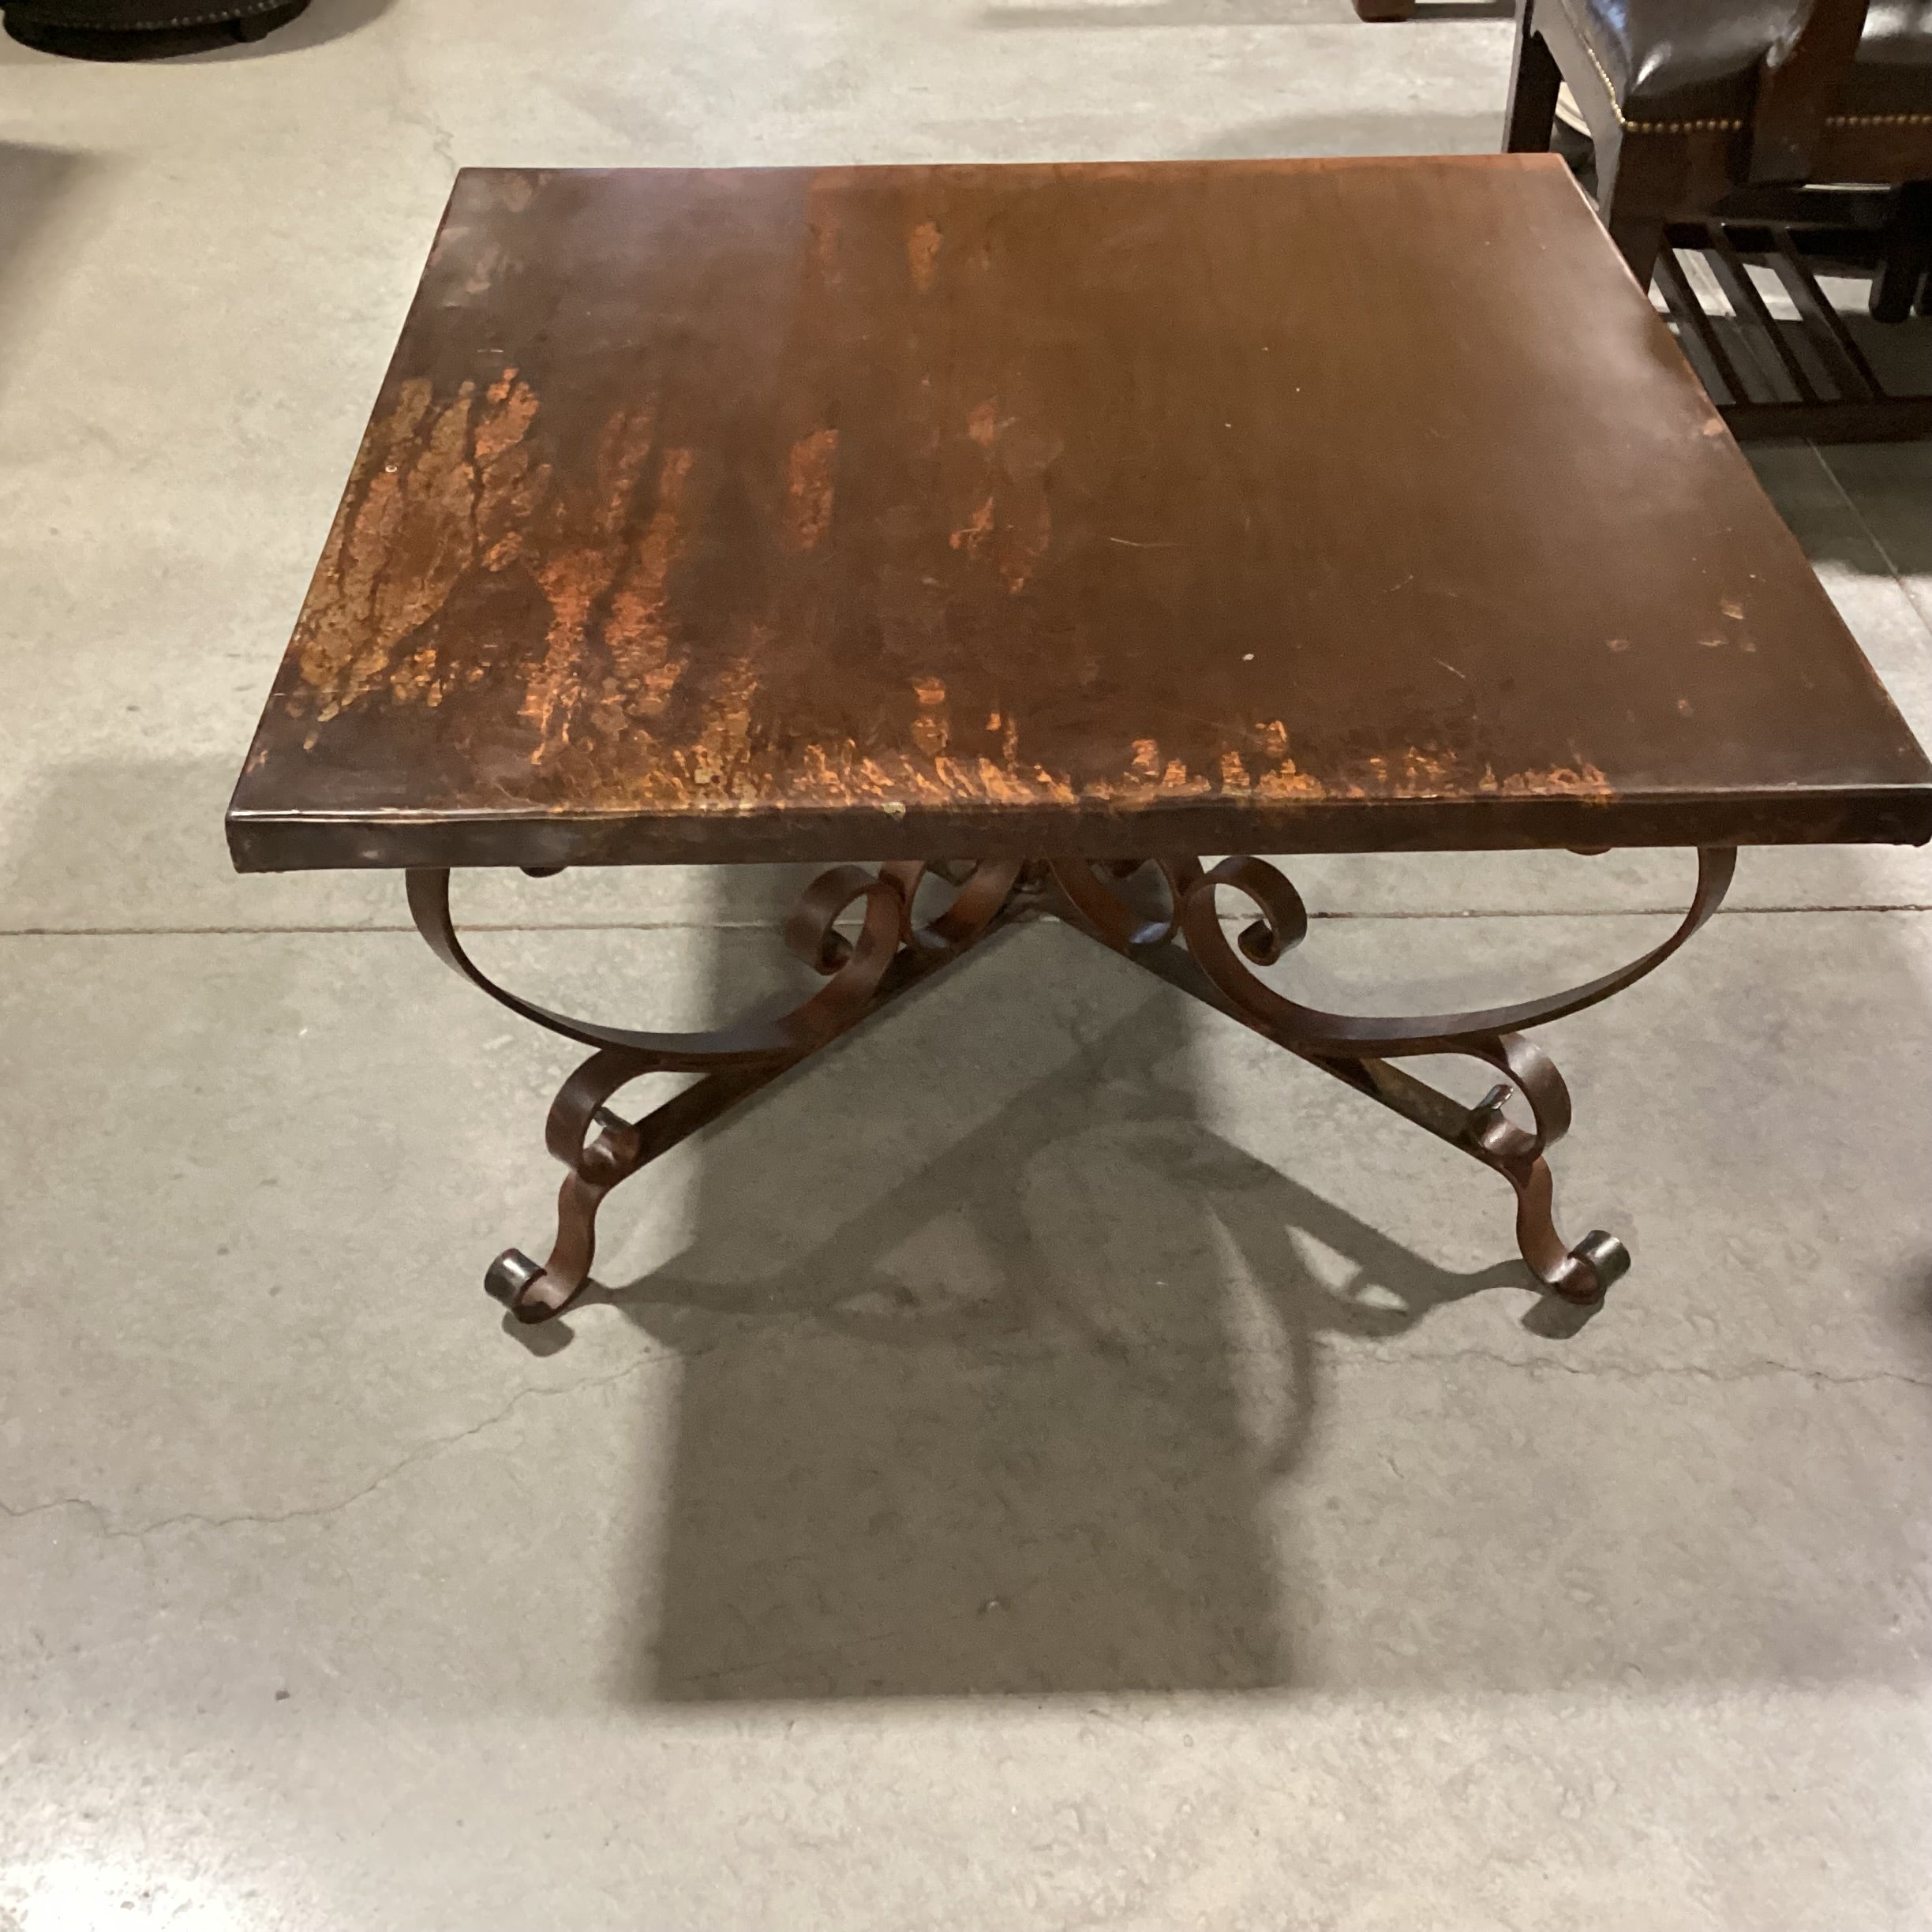 Copper Patina Coffee Table 34”x 34”x 18.5”